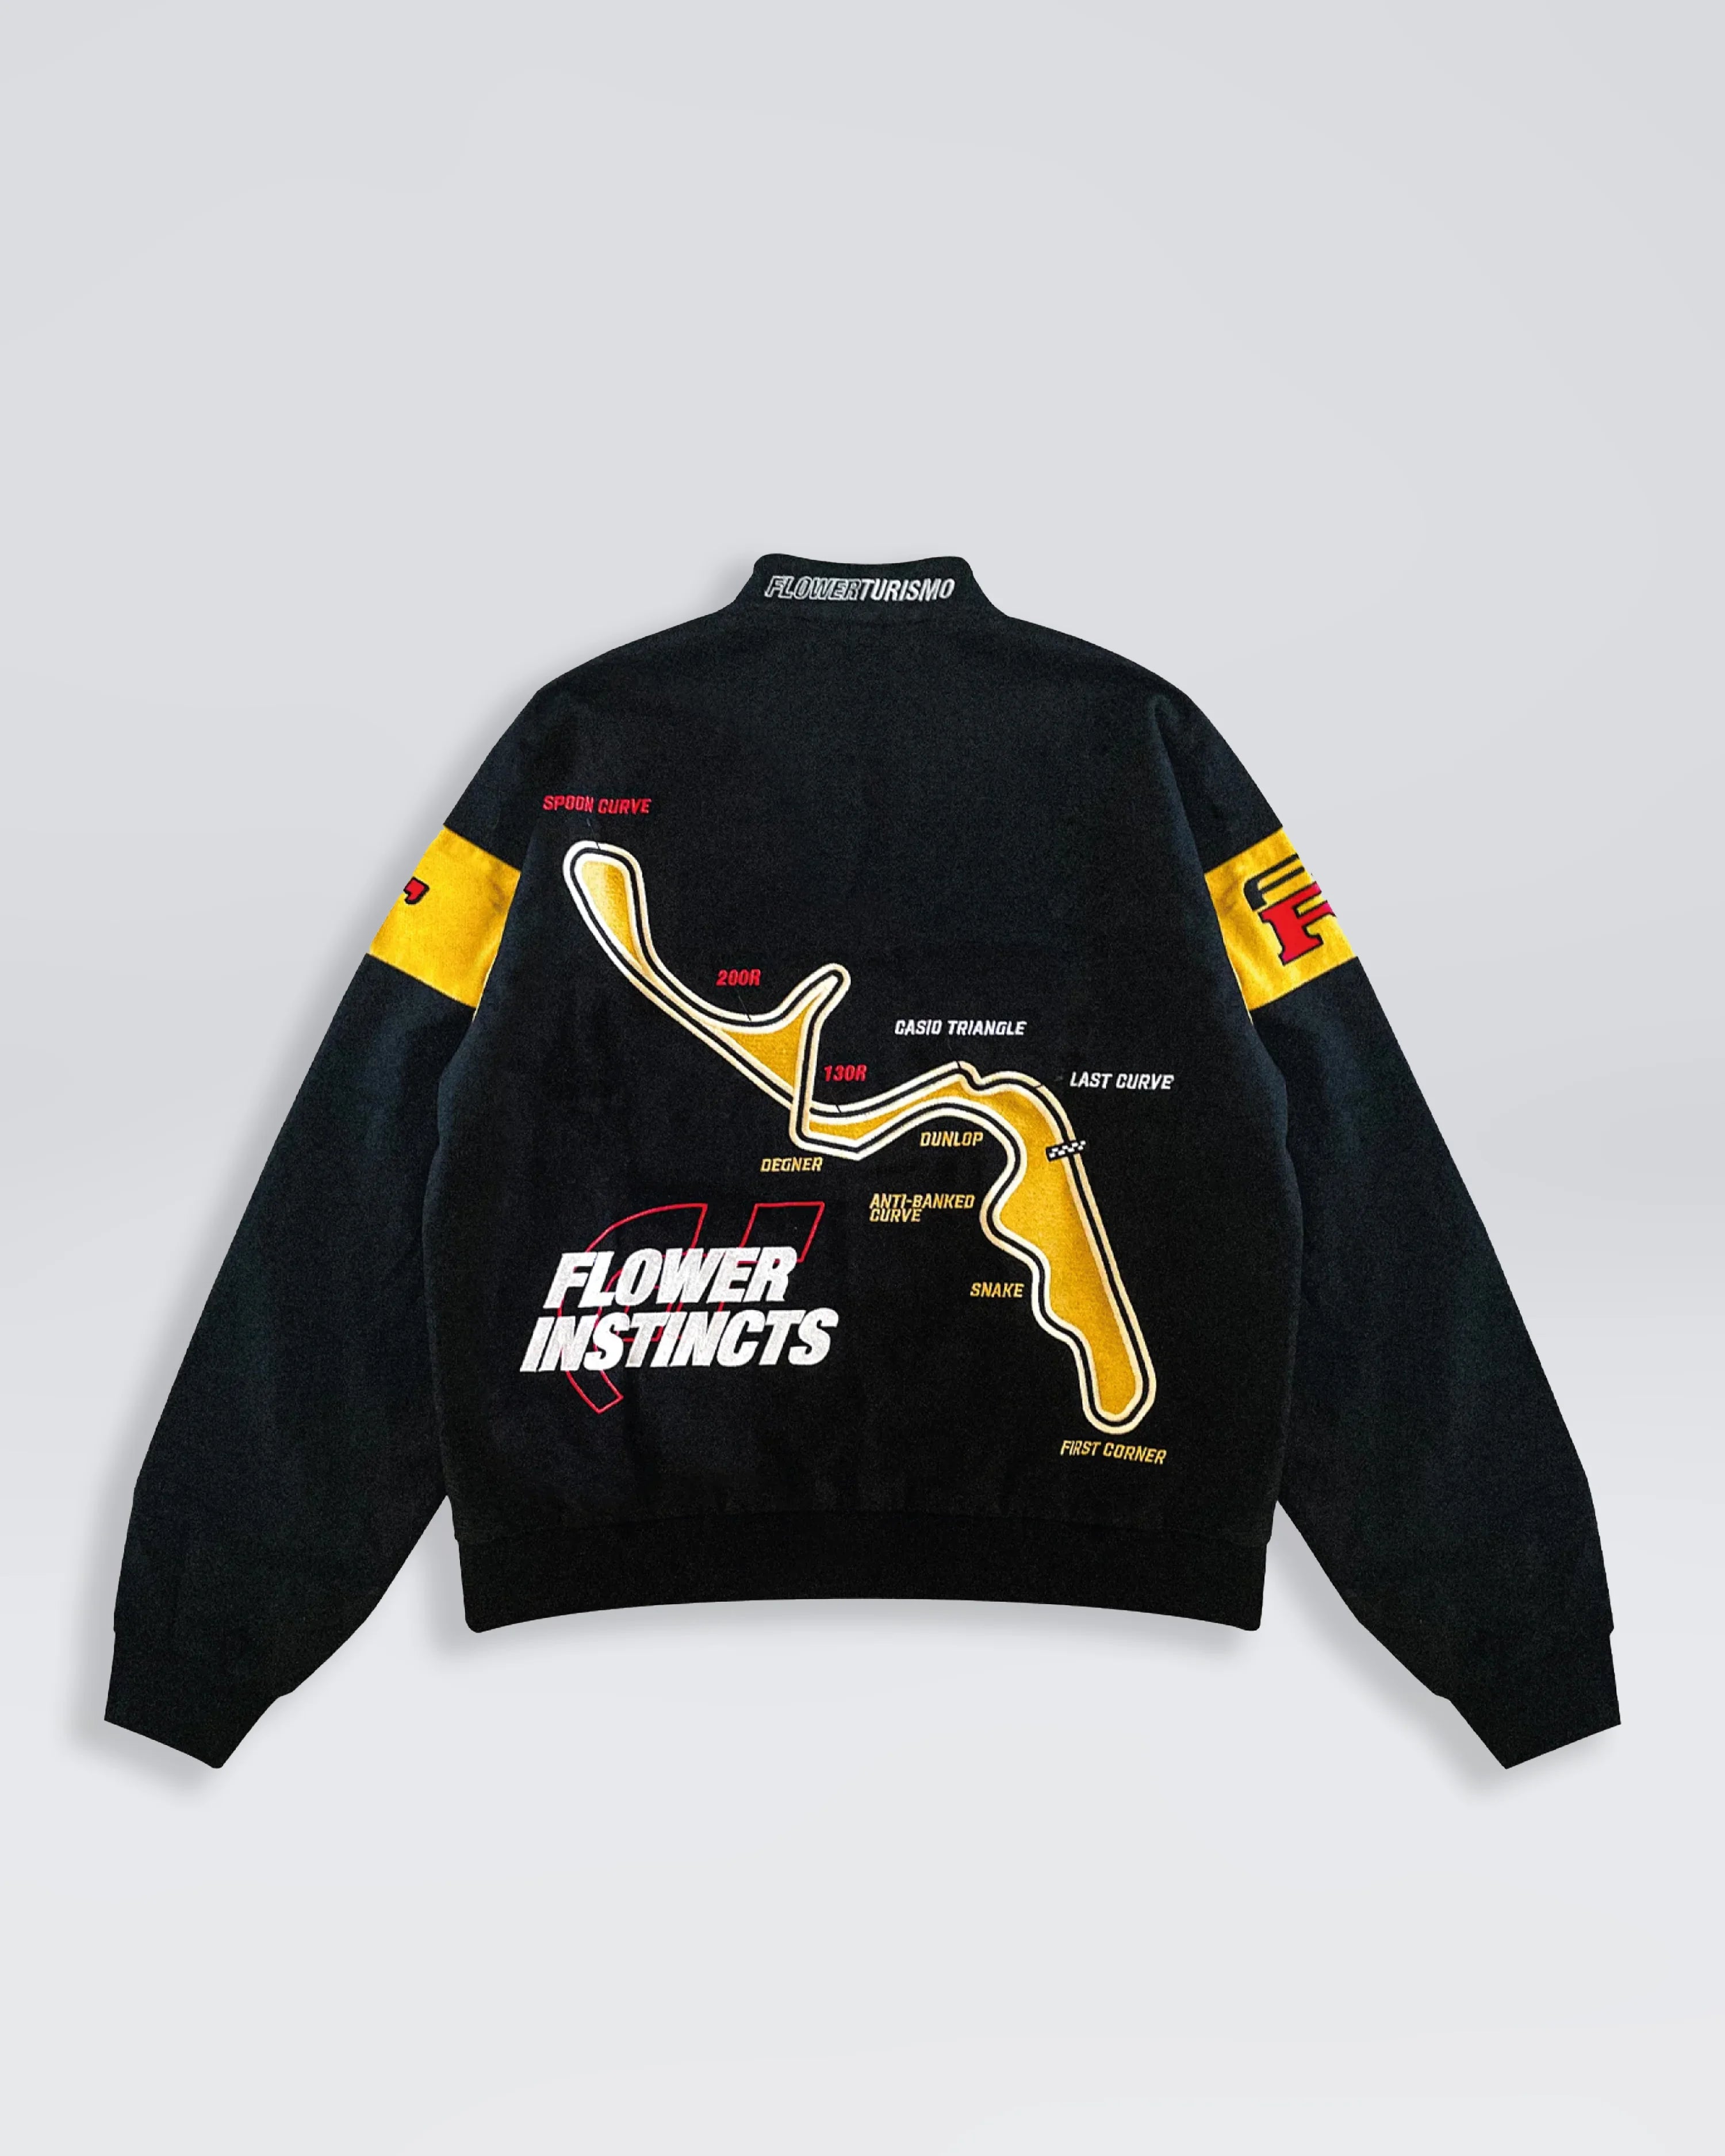 Flower Turismo Racing Jacket Black